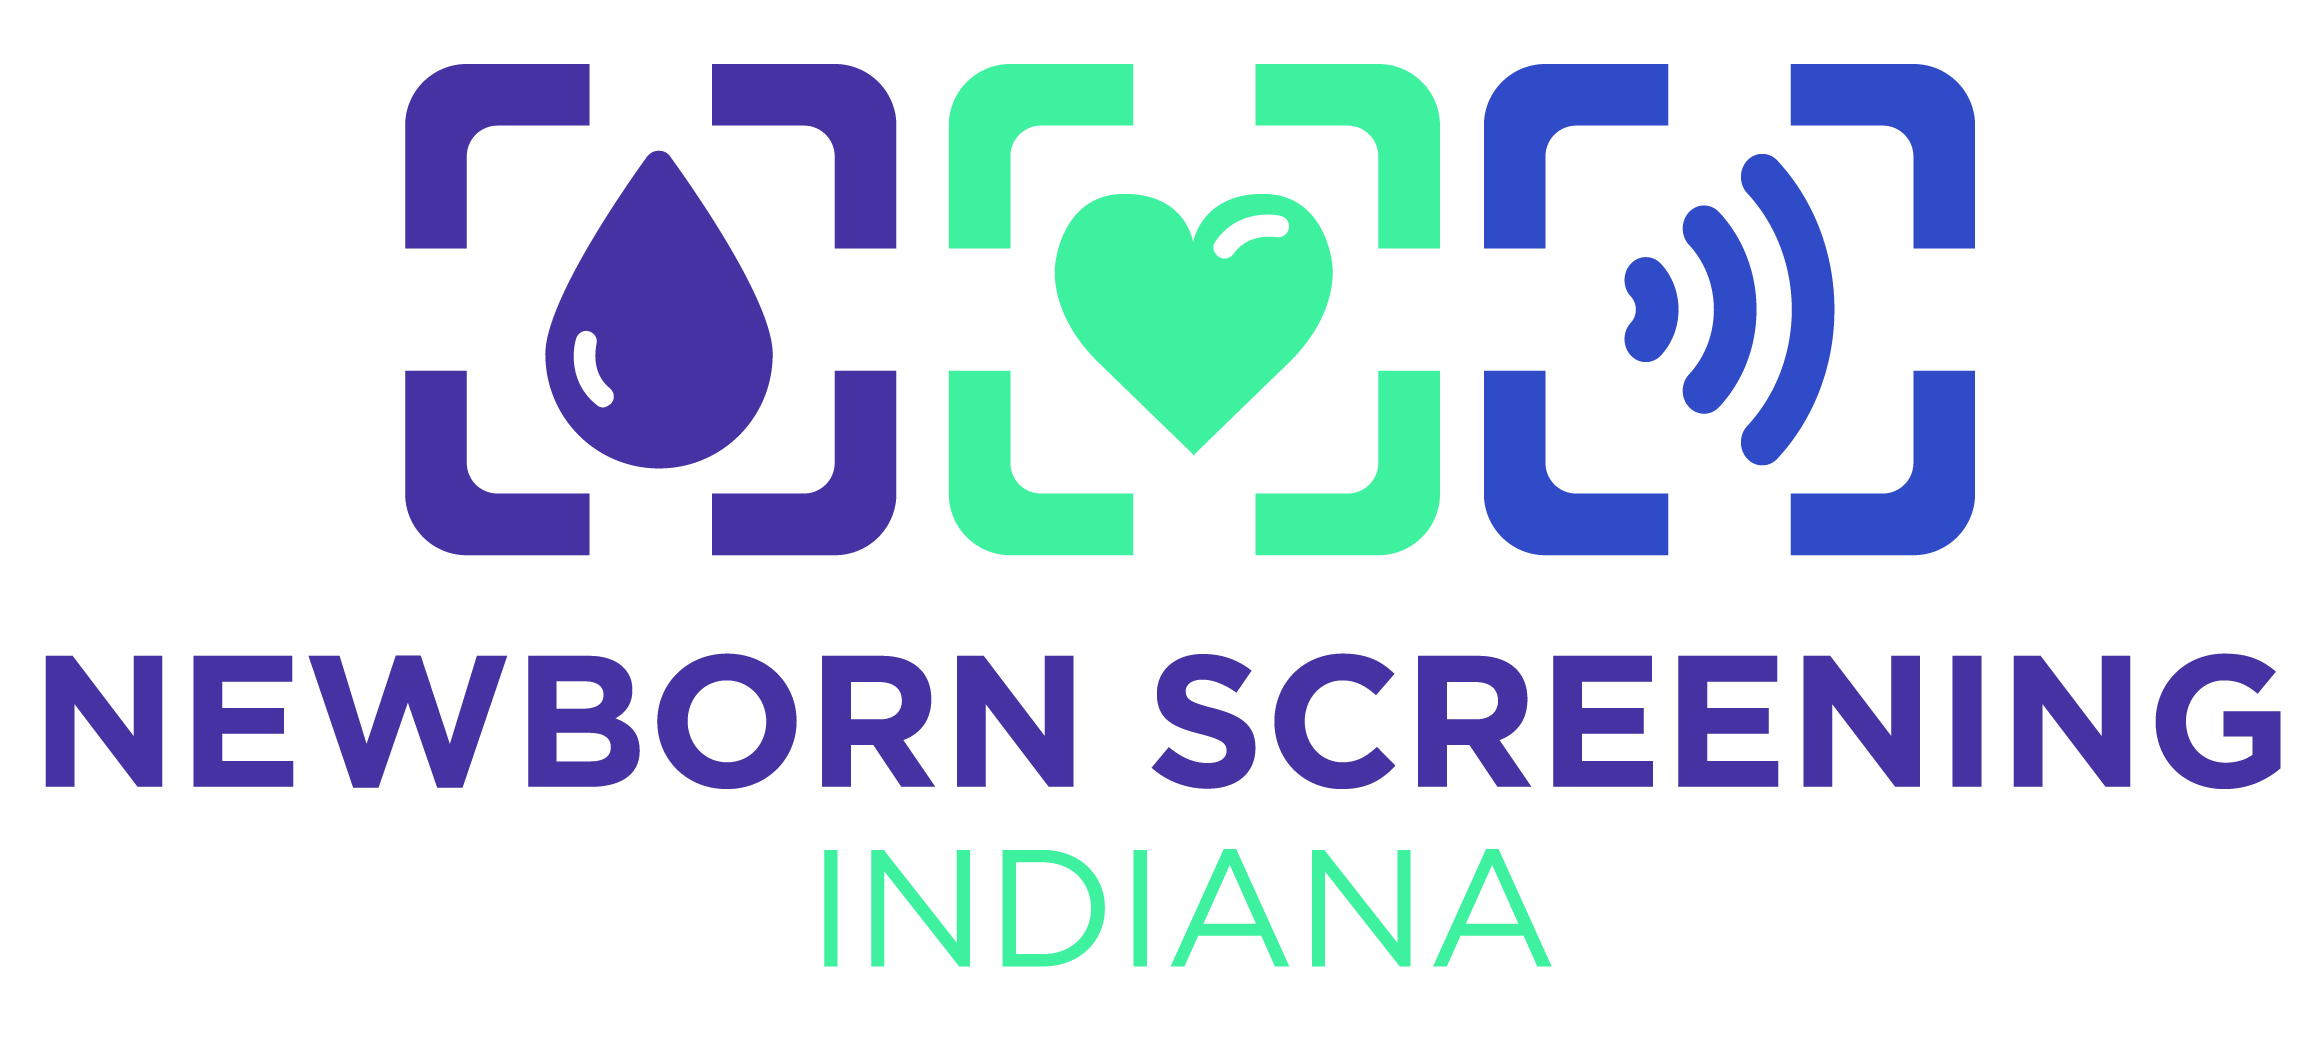 newborn screening program logo